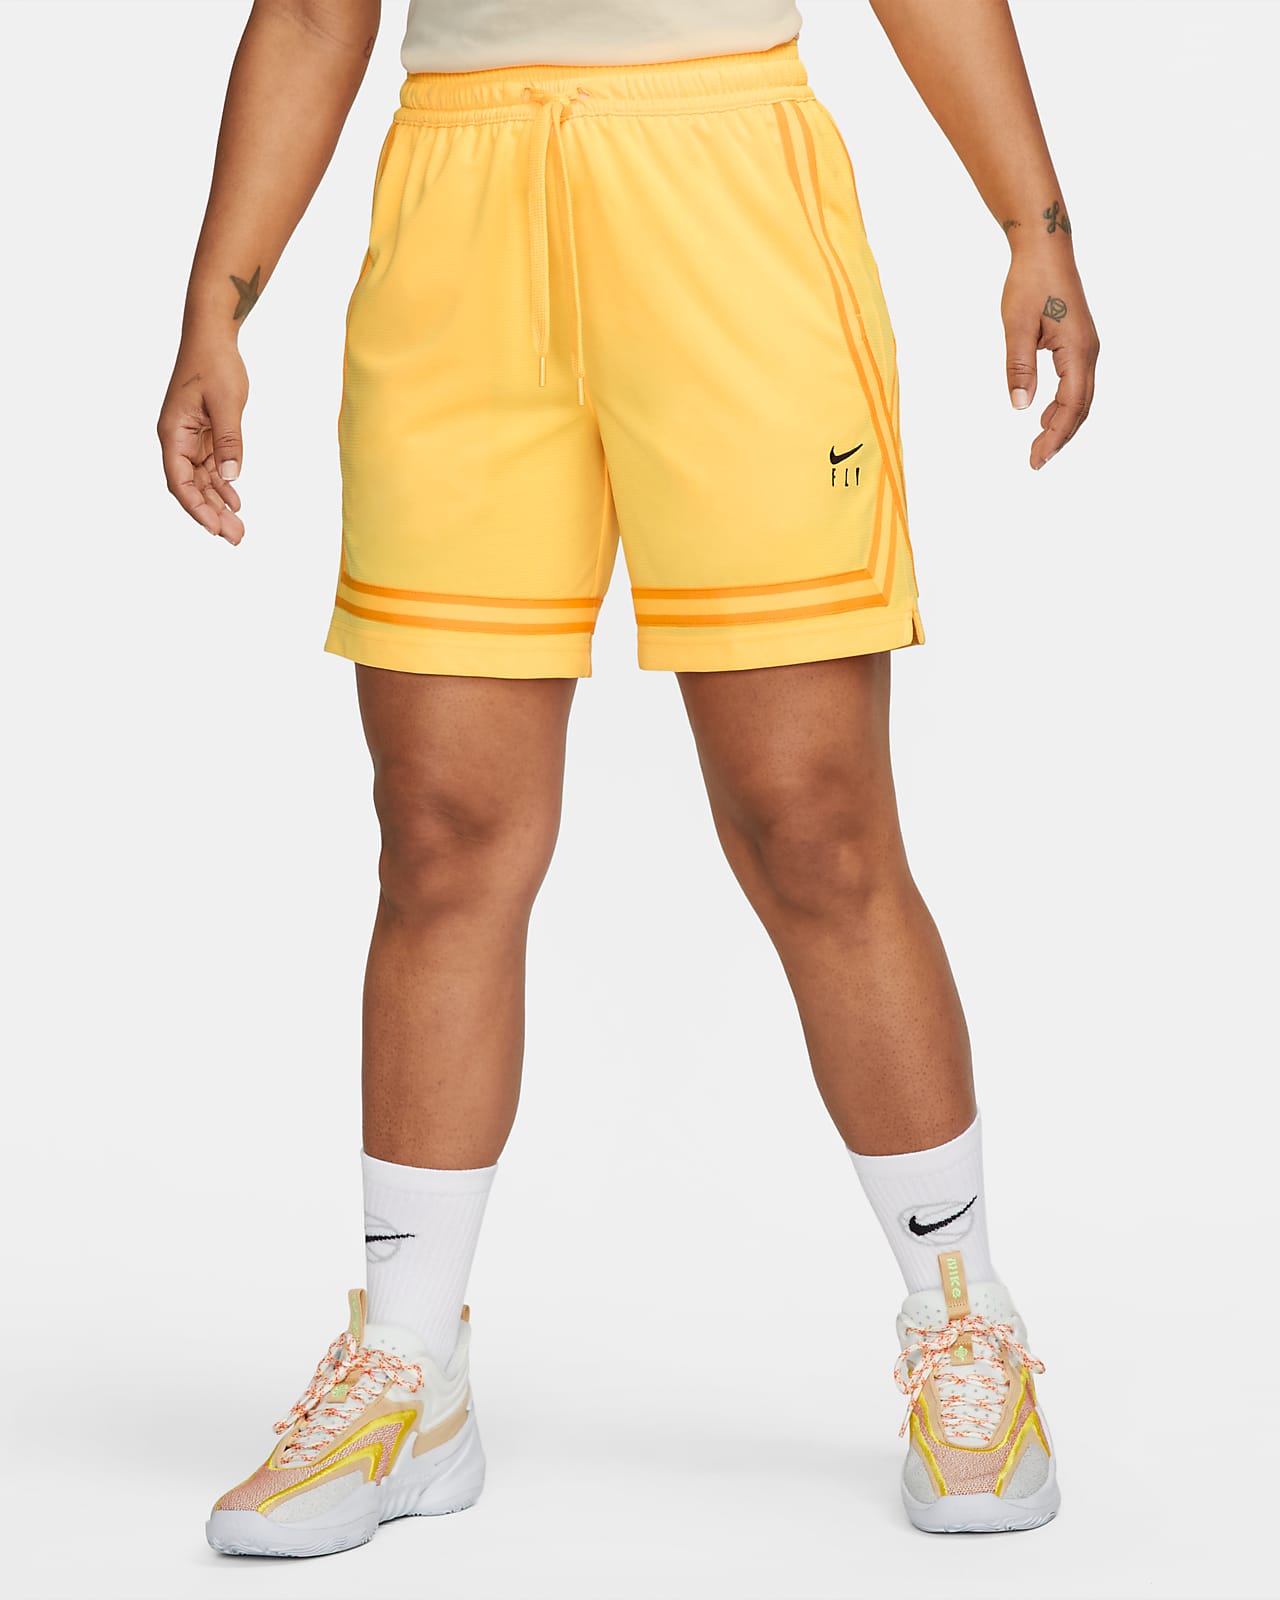 Shorts de básquetbol para mujer Nike Fly Crossover. 